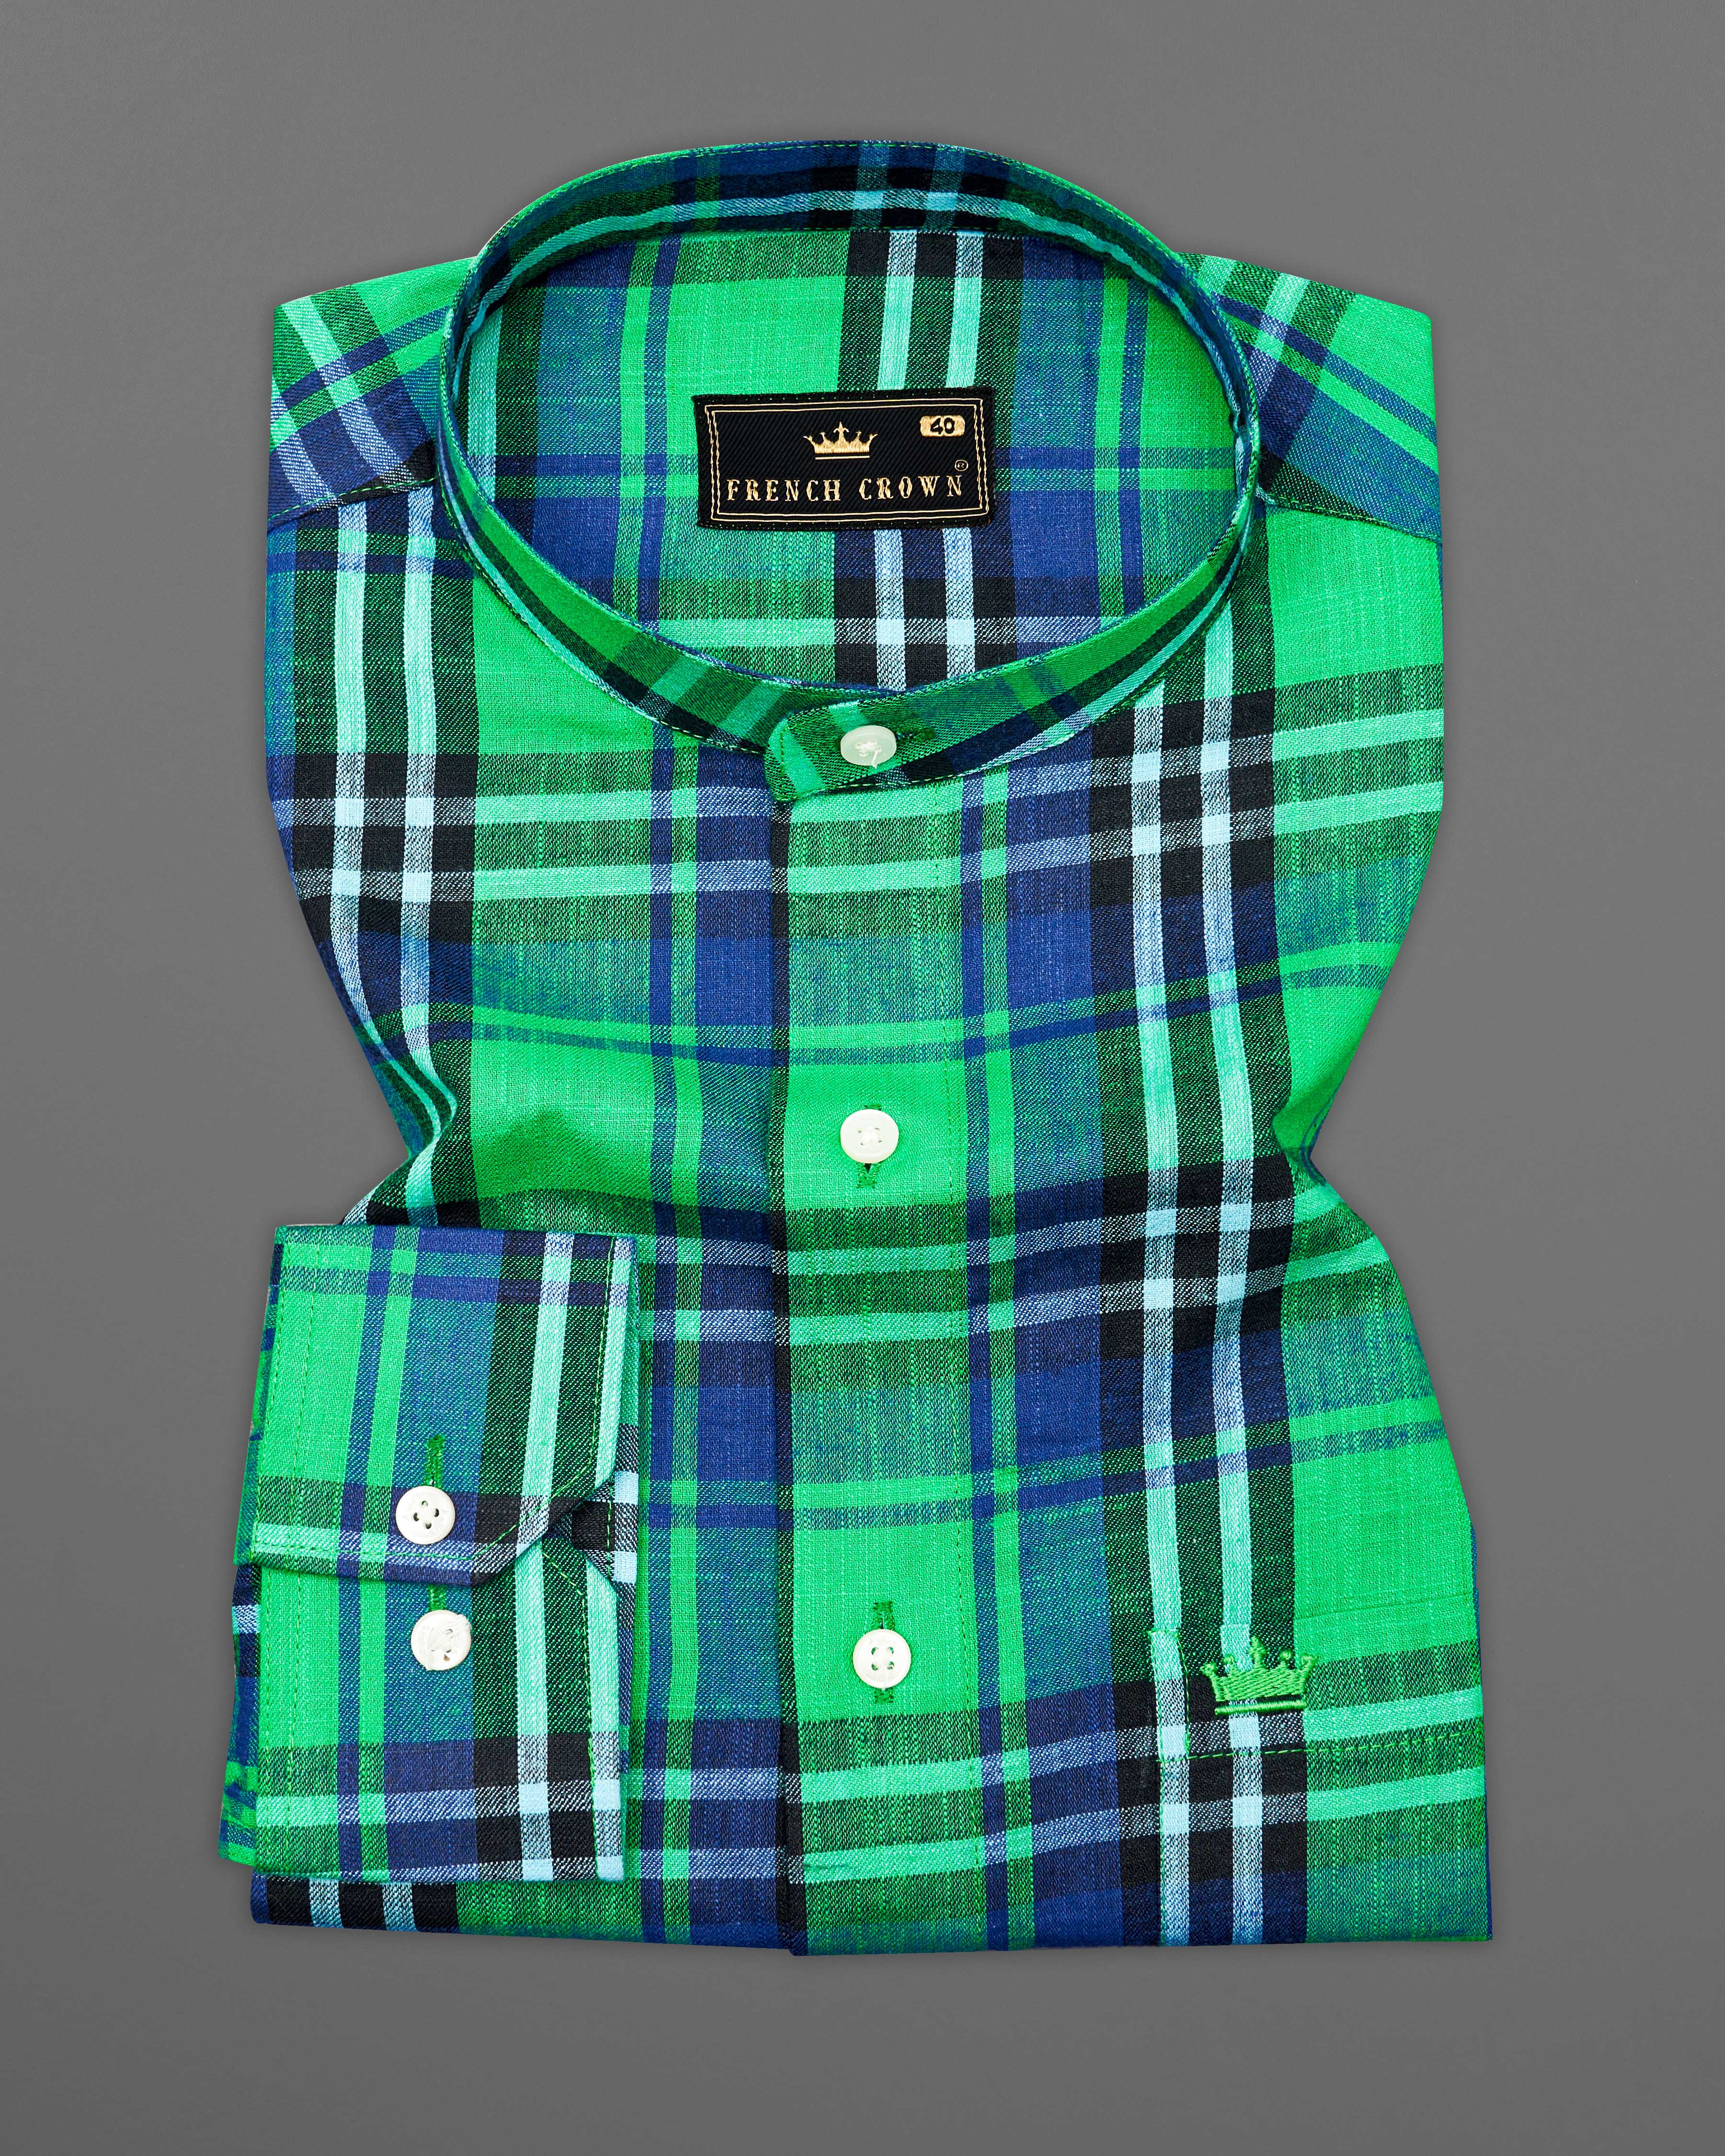 Dark Mint Green with Cerulean Blue Plaid Luxurious Linen Designer Shirt 6121-M-E046-38, 6121-M-E046-H-38, 6121-M-E046-39, 6121-M-E046-H-39, 6121-M-E046-40, 6121-M-E046-H-40, 6121-M-E046-42, 6121-M-E046-H-42, 6121-M-E046-44, 6121-M-E046-H-44, 6121-M-E046-46, 6121-M-E046-H-46, 6121-M-E046-48, 6121-M-E046-H-48, 6121-M-E046-50, 6121-M-E046-H-50, 6121-M-E046-52, 6121-M-E046-H-52